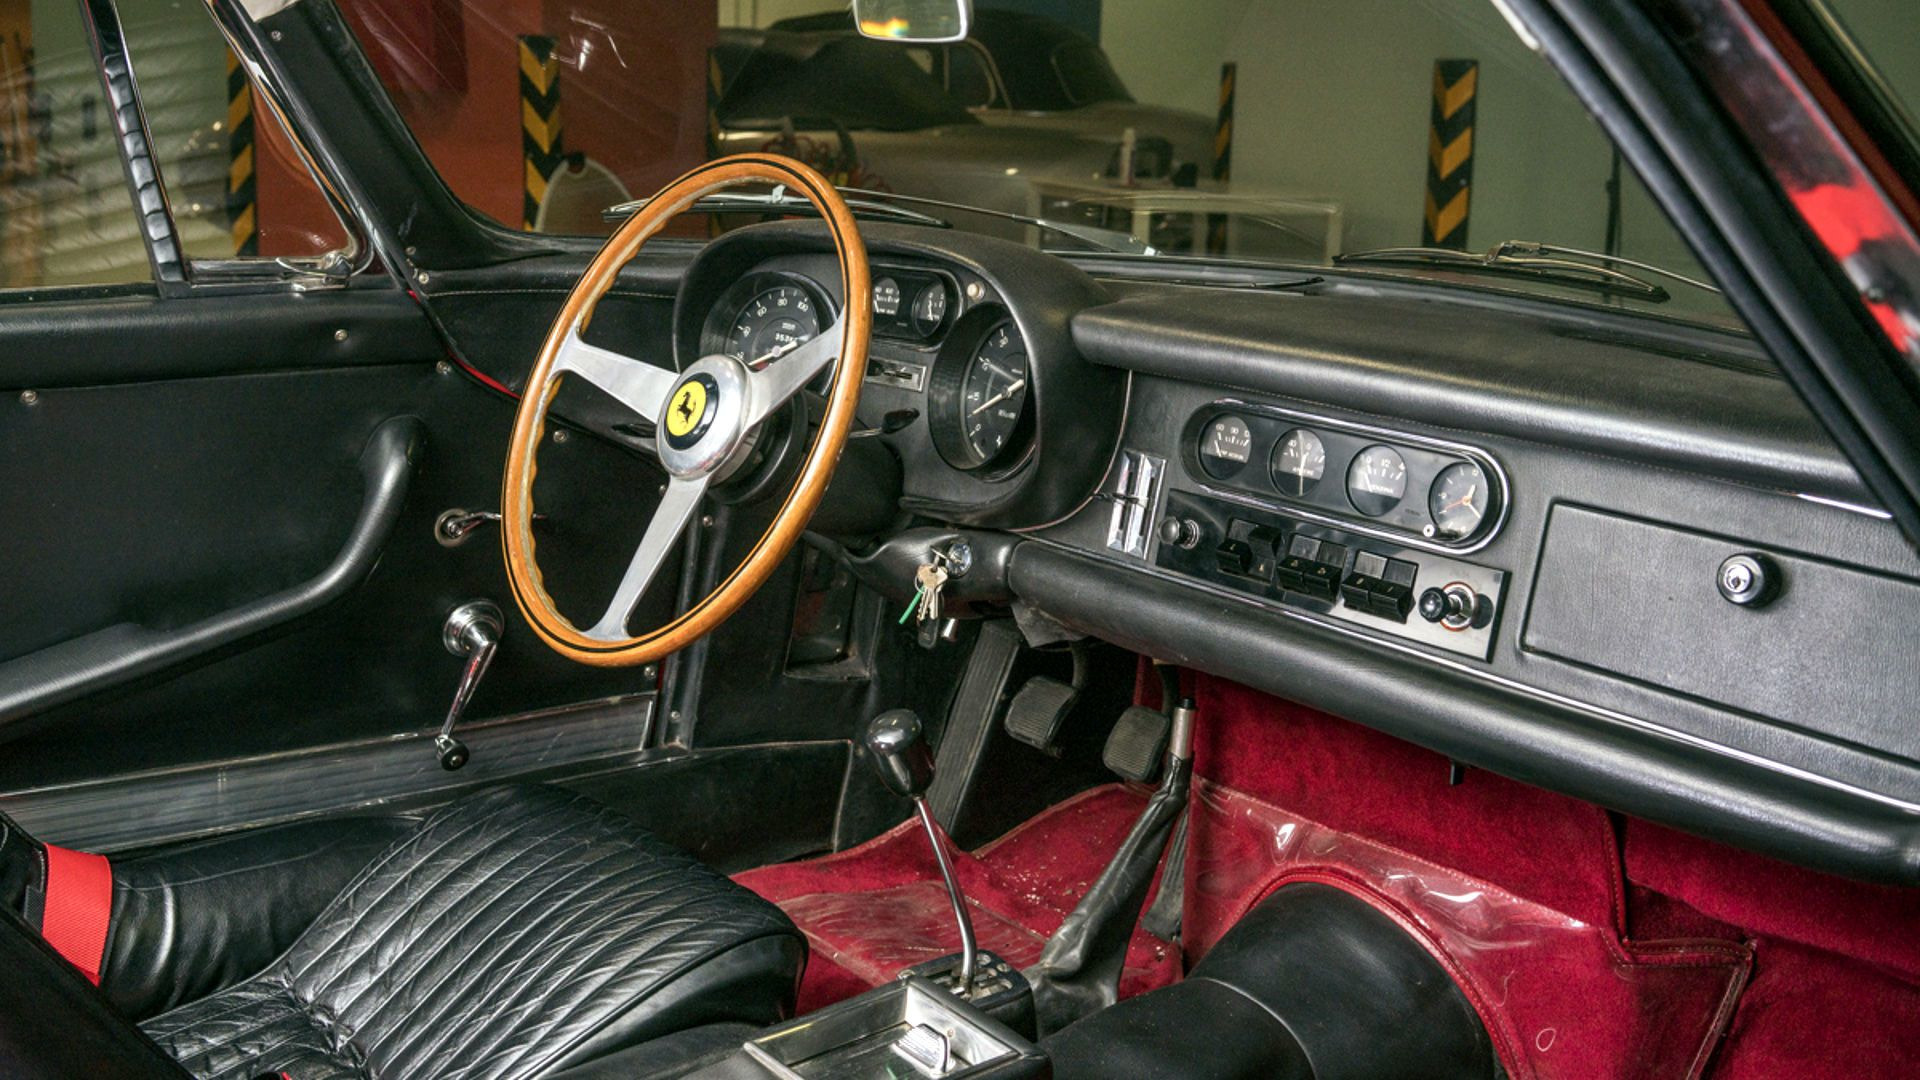 Prvi proizvedeni Ferrari 275 GTB/4 na aukciji 18. maja u Londonu